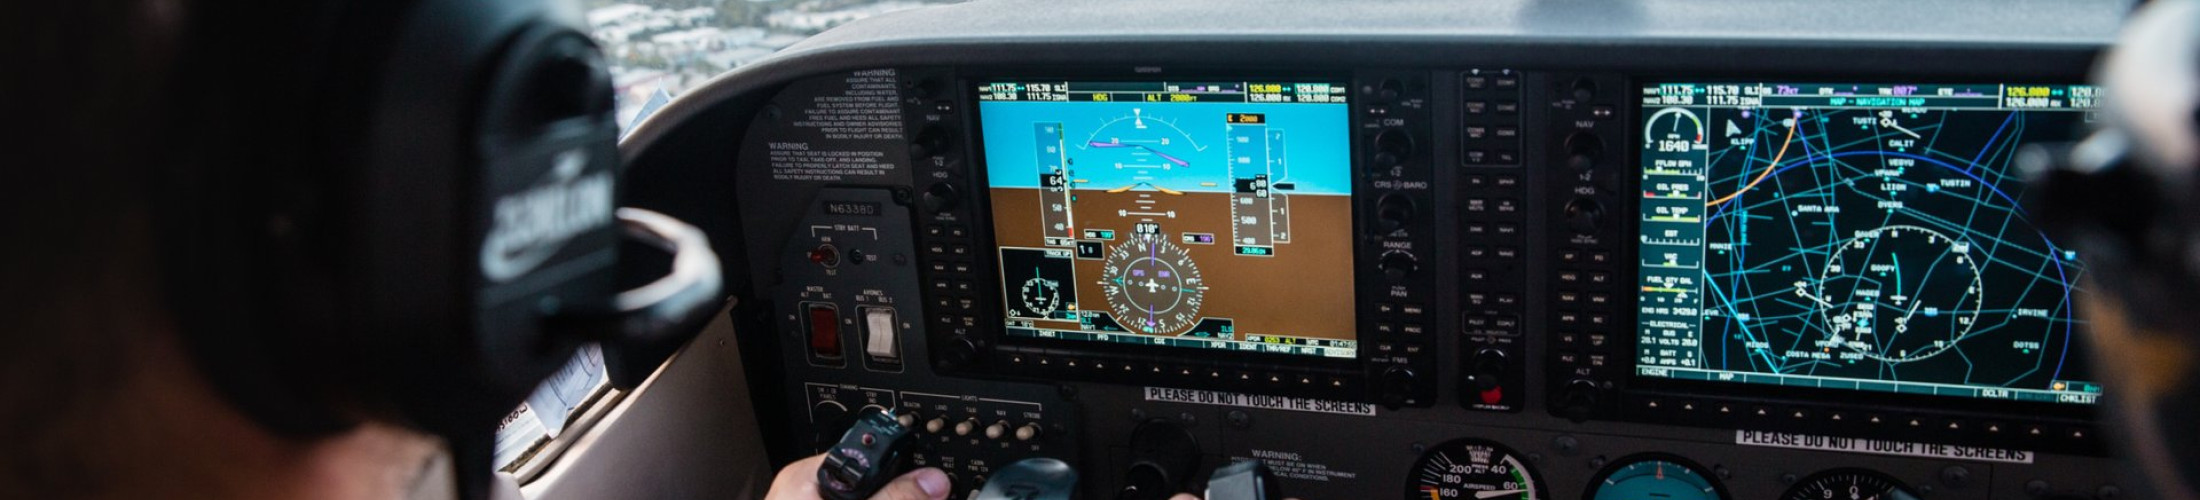 cockpit-view-of-pilot-flying-plane.jpg